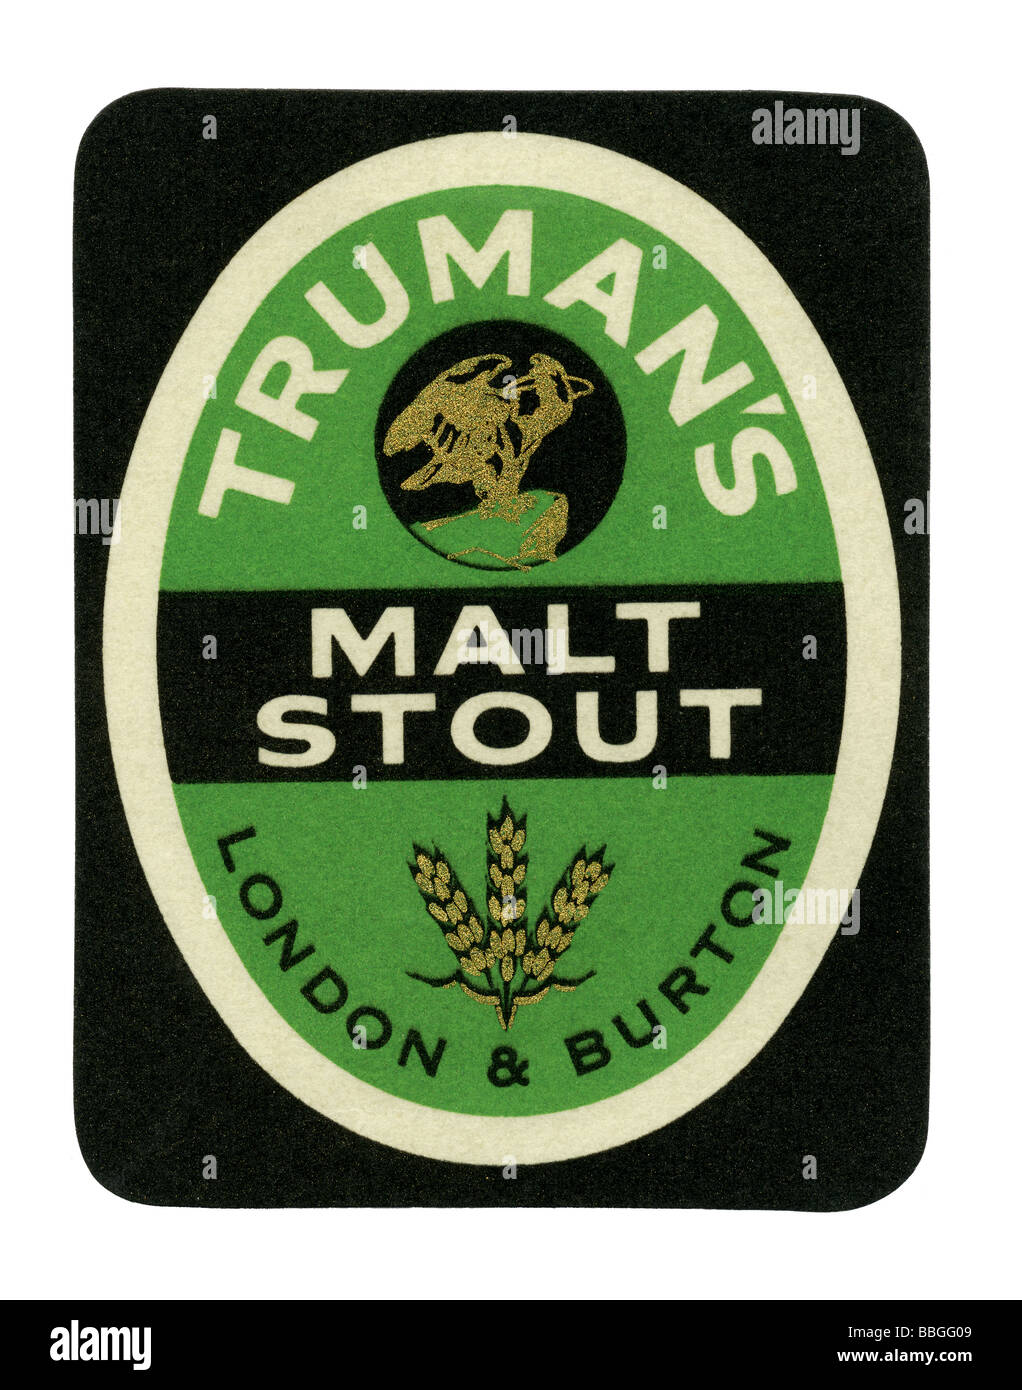 Old British beer label for Truman's Malt Stout, Burton upon Trent, Staffs Stock Photo